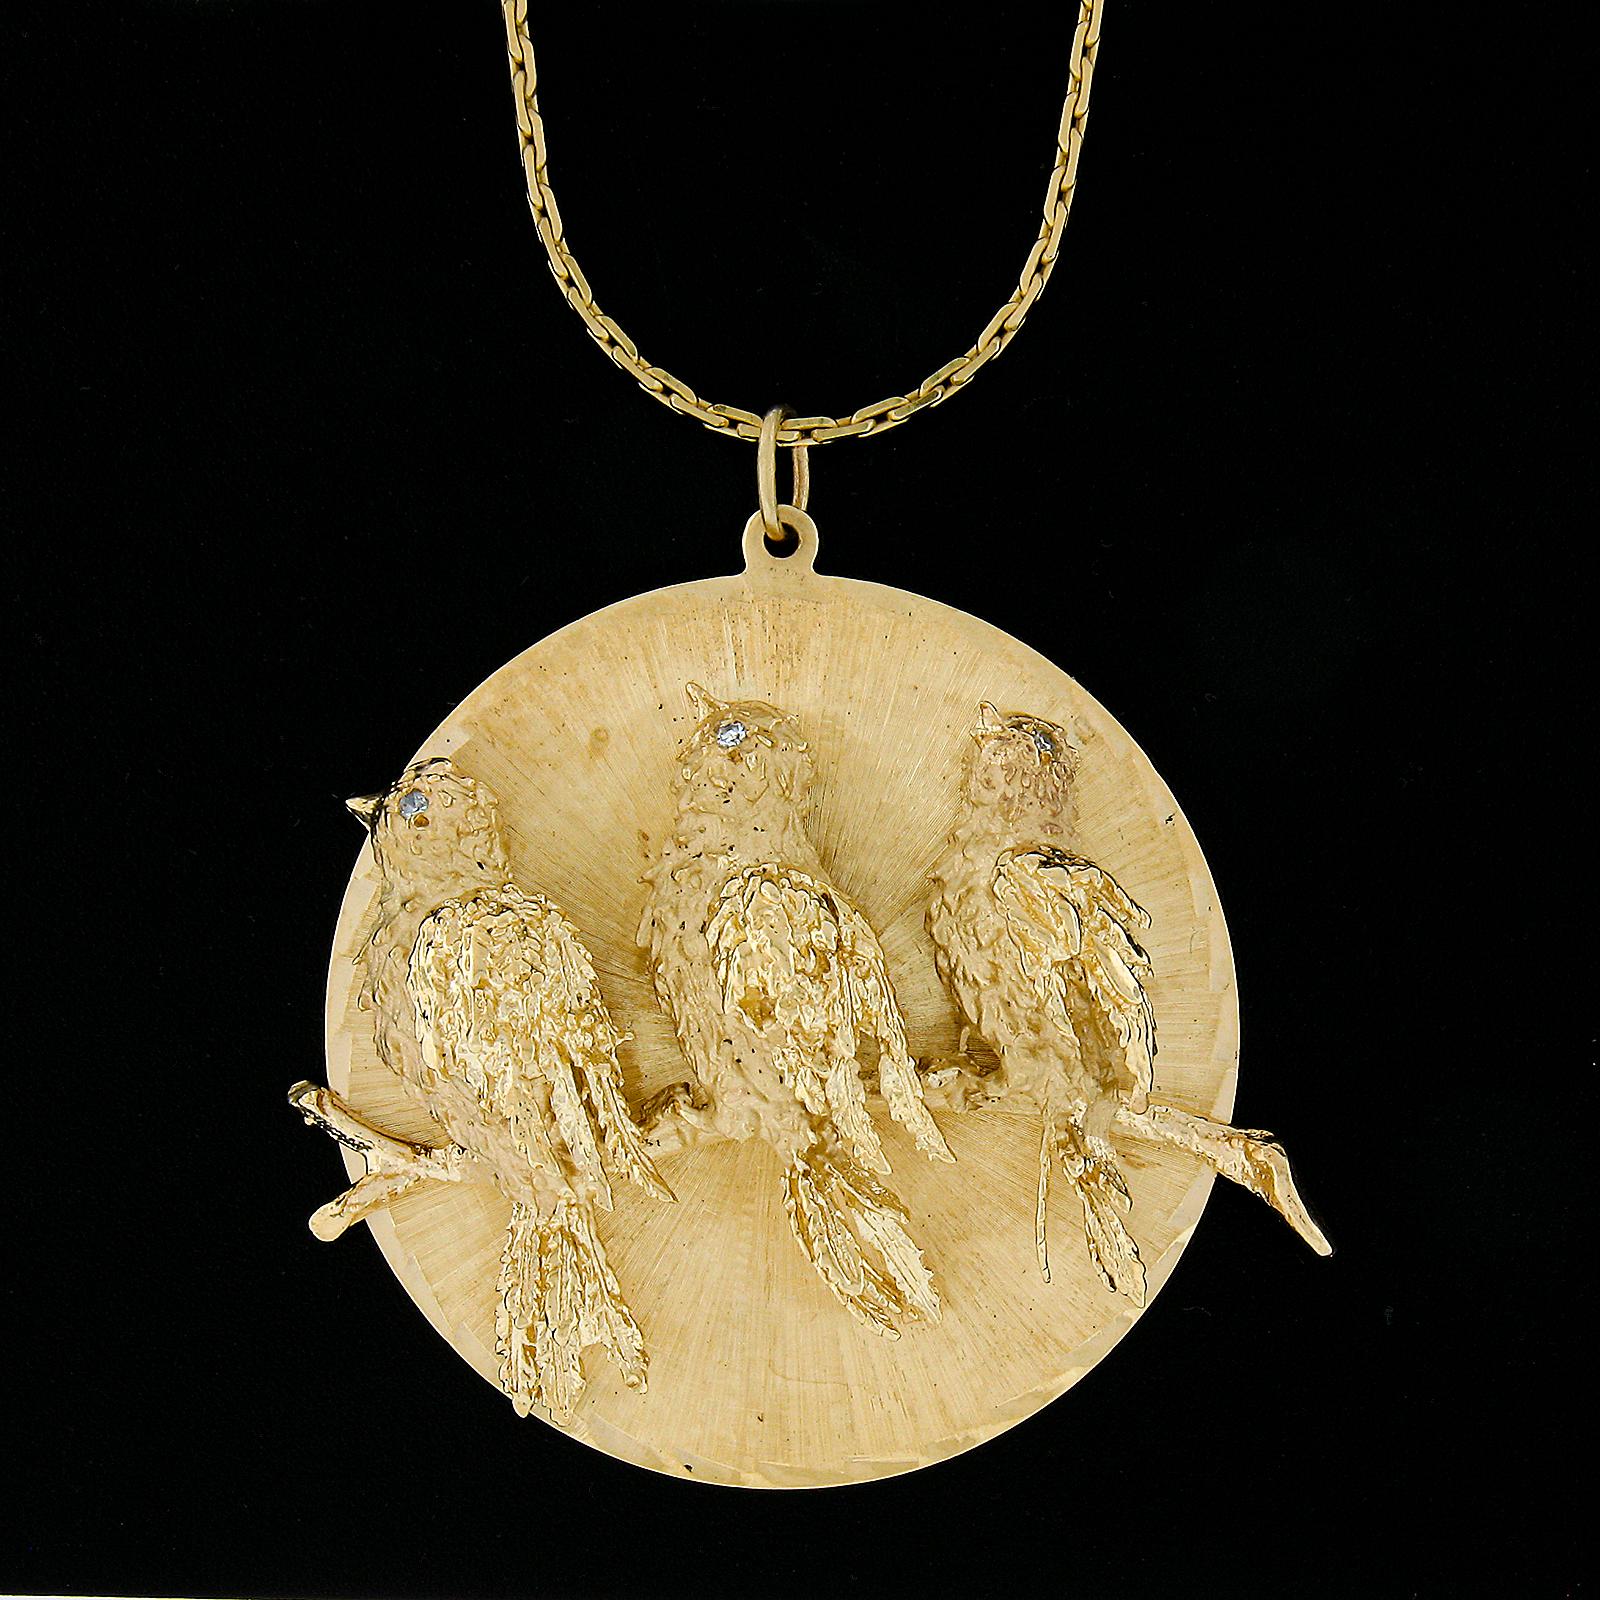 Vintage 14k Gold 3D Große strukturierte 3 Vögel Medaillon Anhänger Kette mit Diamant (Rundschliff) im Angebot